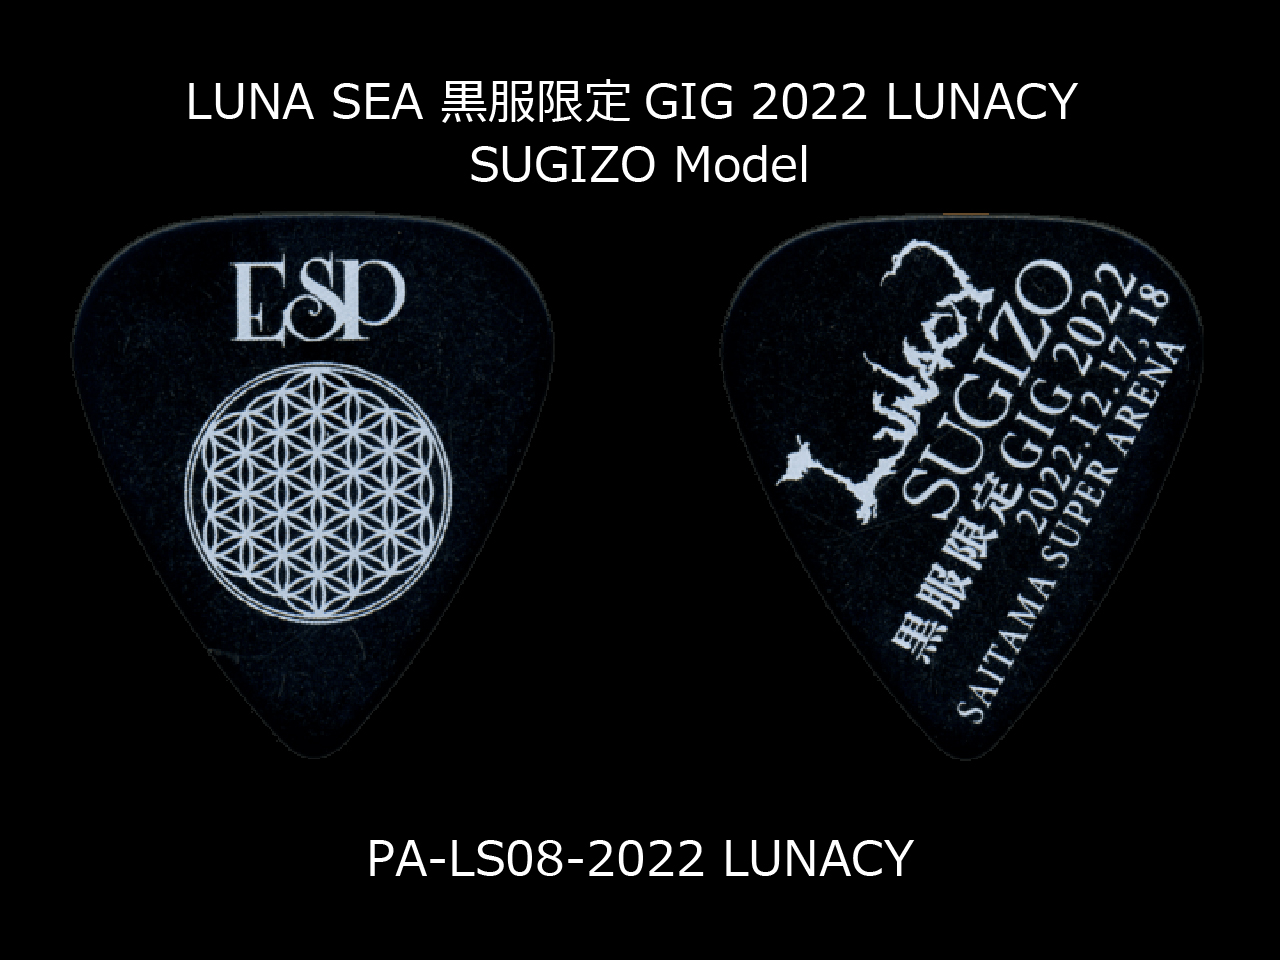 ESP(イーエスピー) Artist Pick Series PA-LS08-2022 LUNACY LUNA SEA 黒服限定GIG 2022 LUNACY SUGIZO Model (LUNA SEA/SUGIZOモデル)